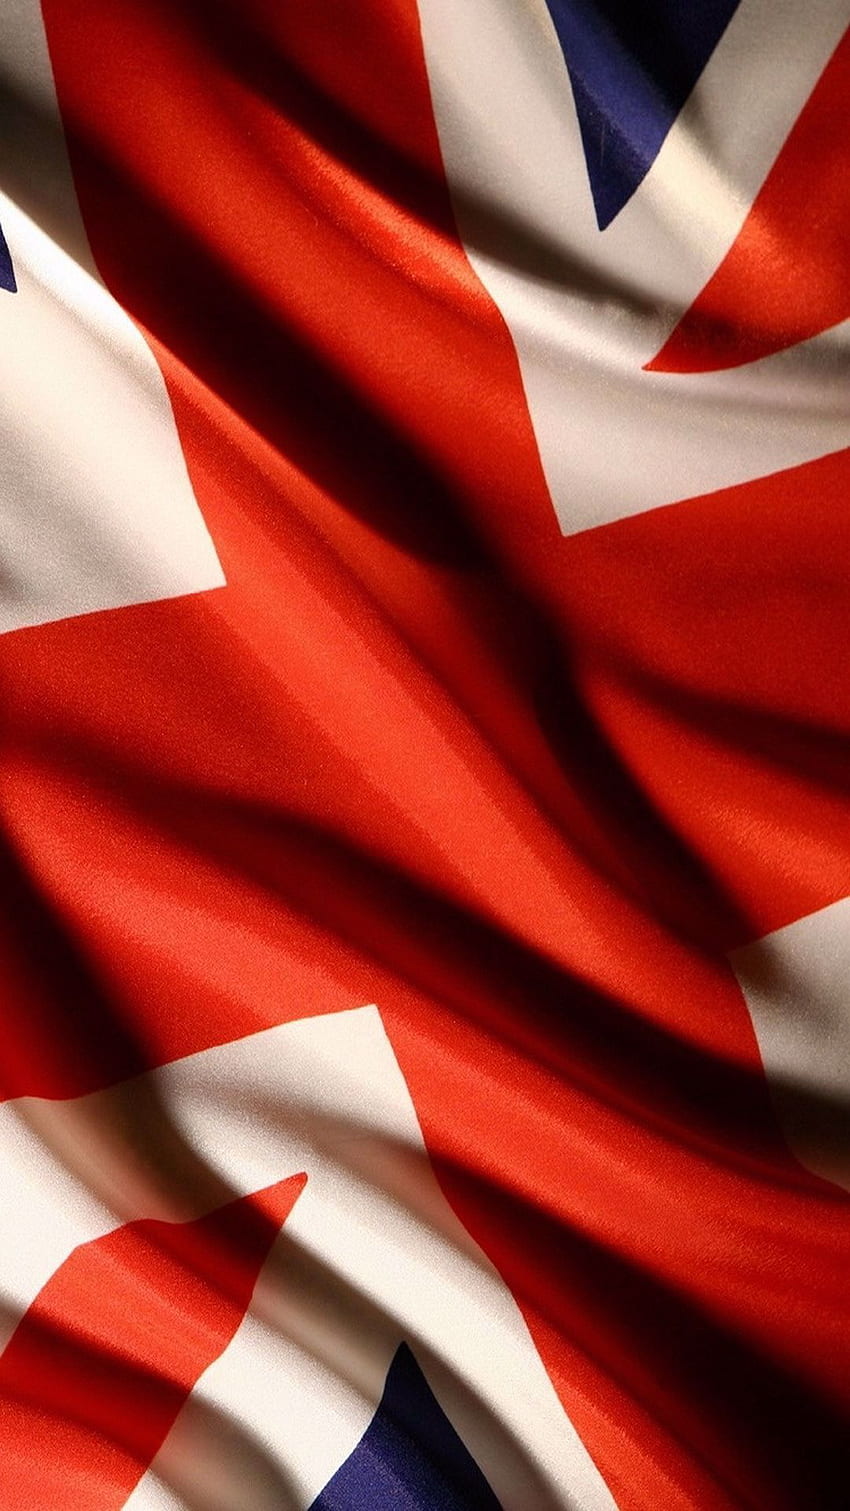 Ƒ↑TAP DAN DAPATKAN APLIKASINYA! Stylish British Flag Red Union Jack Great Britai. wallpaper ponsel HD